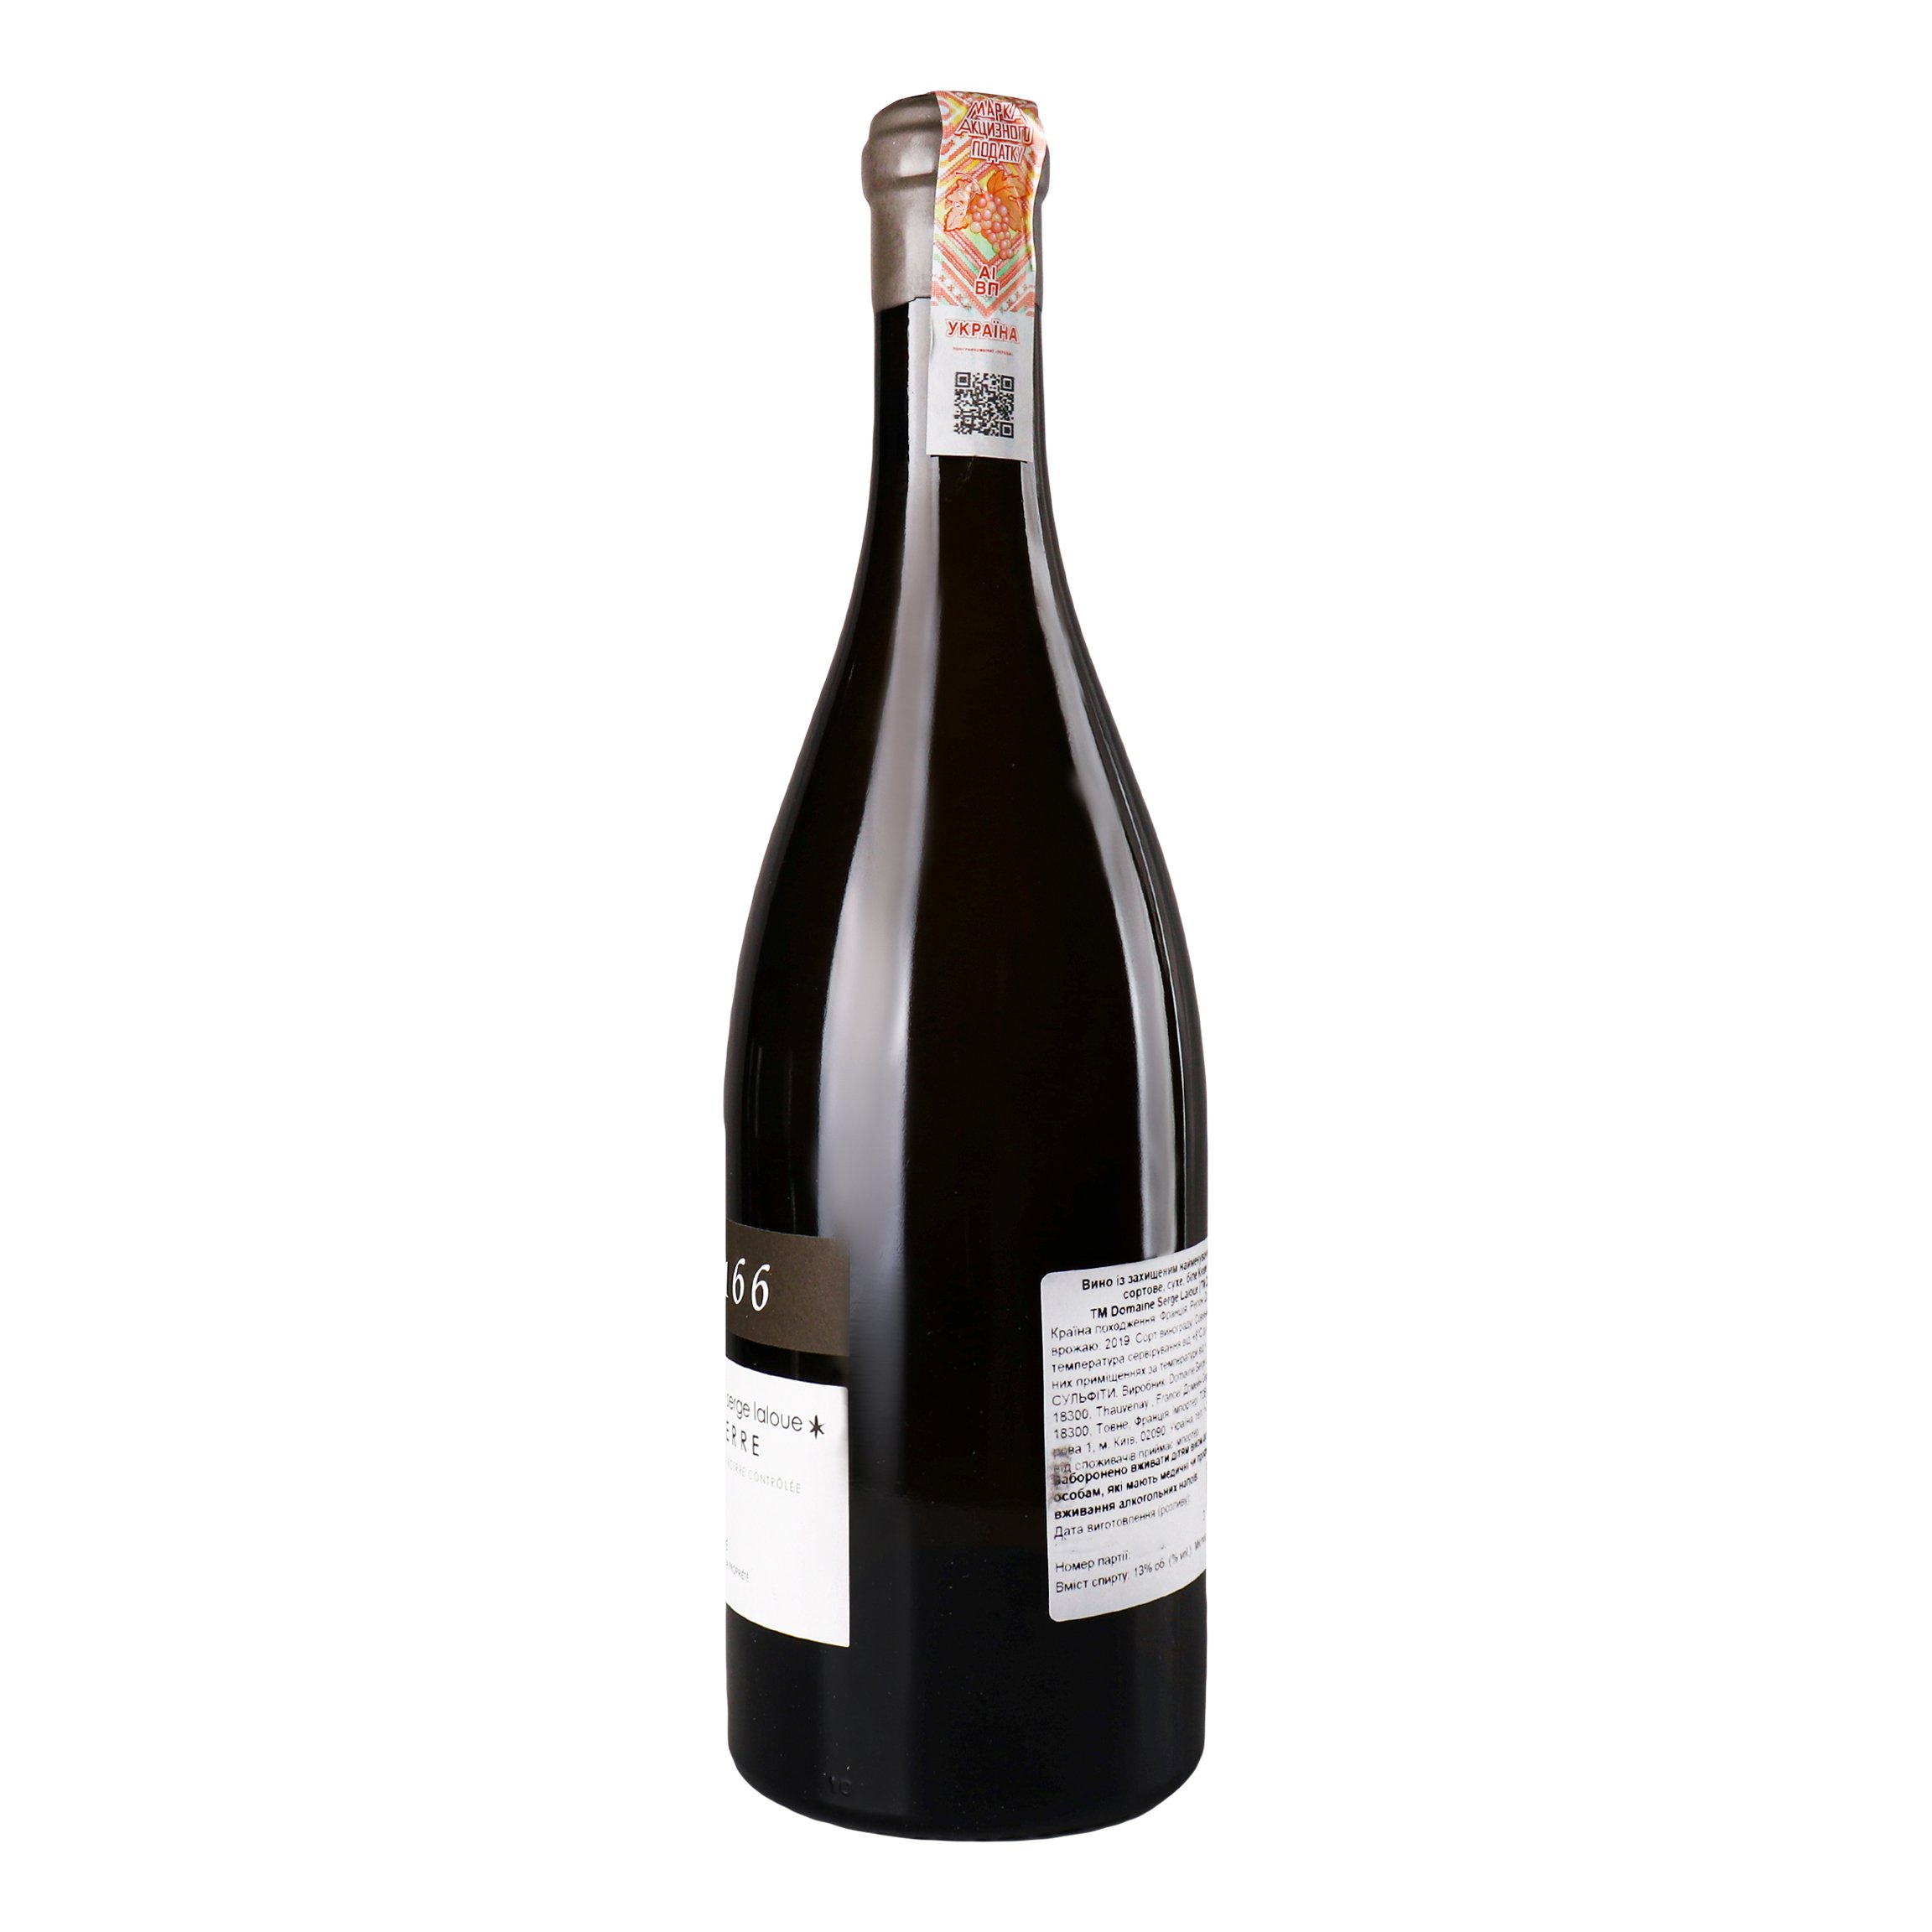 Вино Domaine Serge Laloue Sancerre Cuvee 1166, 2019 AOC, біле, сухе, 13%, 0,75 л (688 967) - фото 3